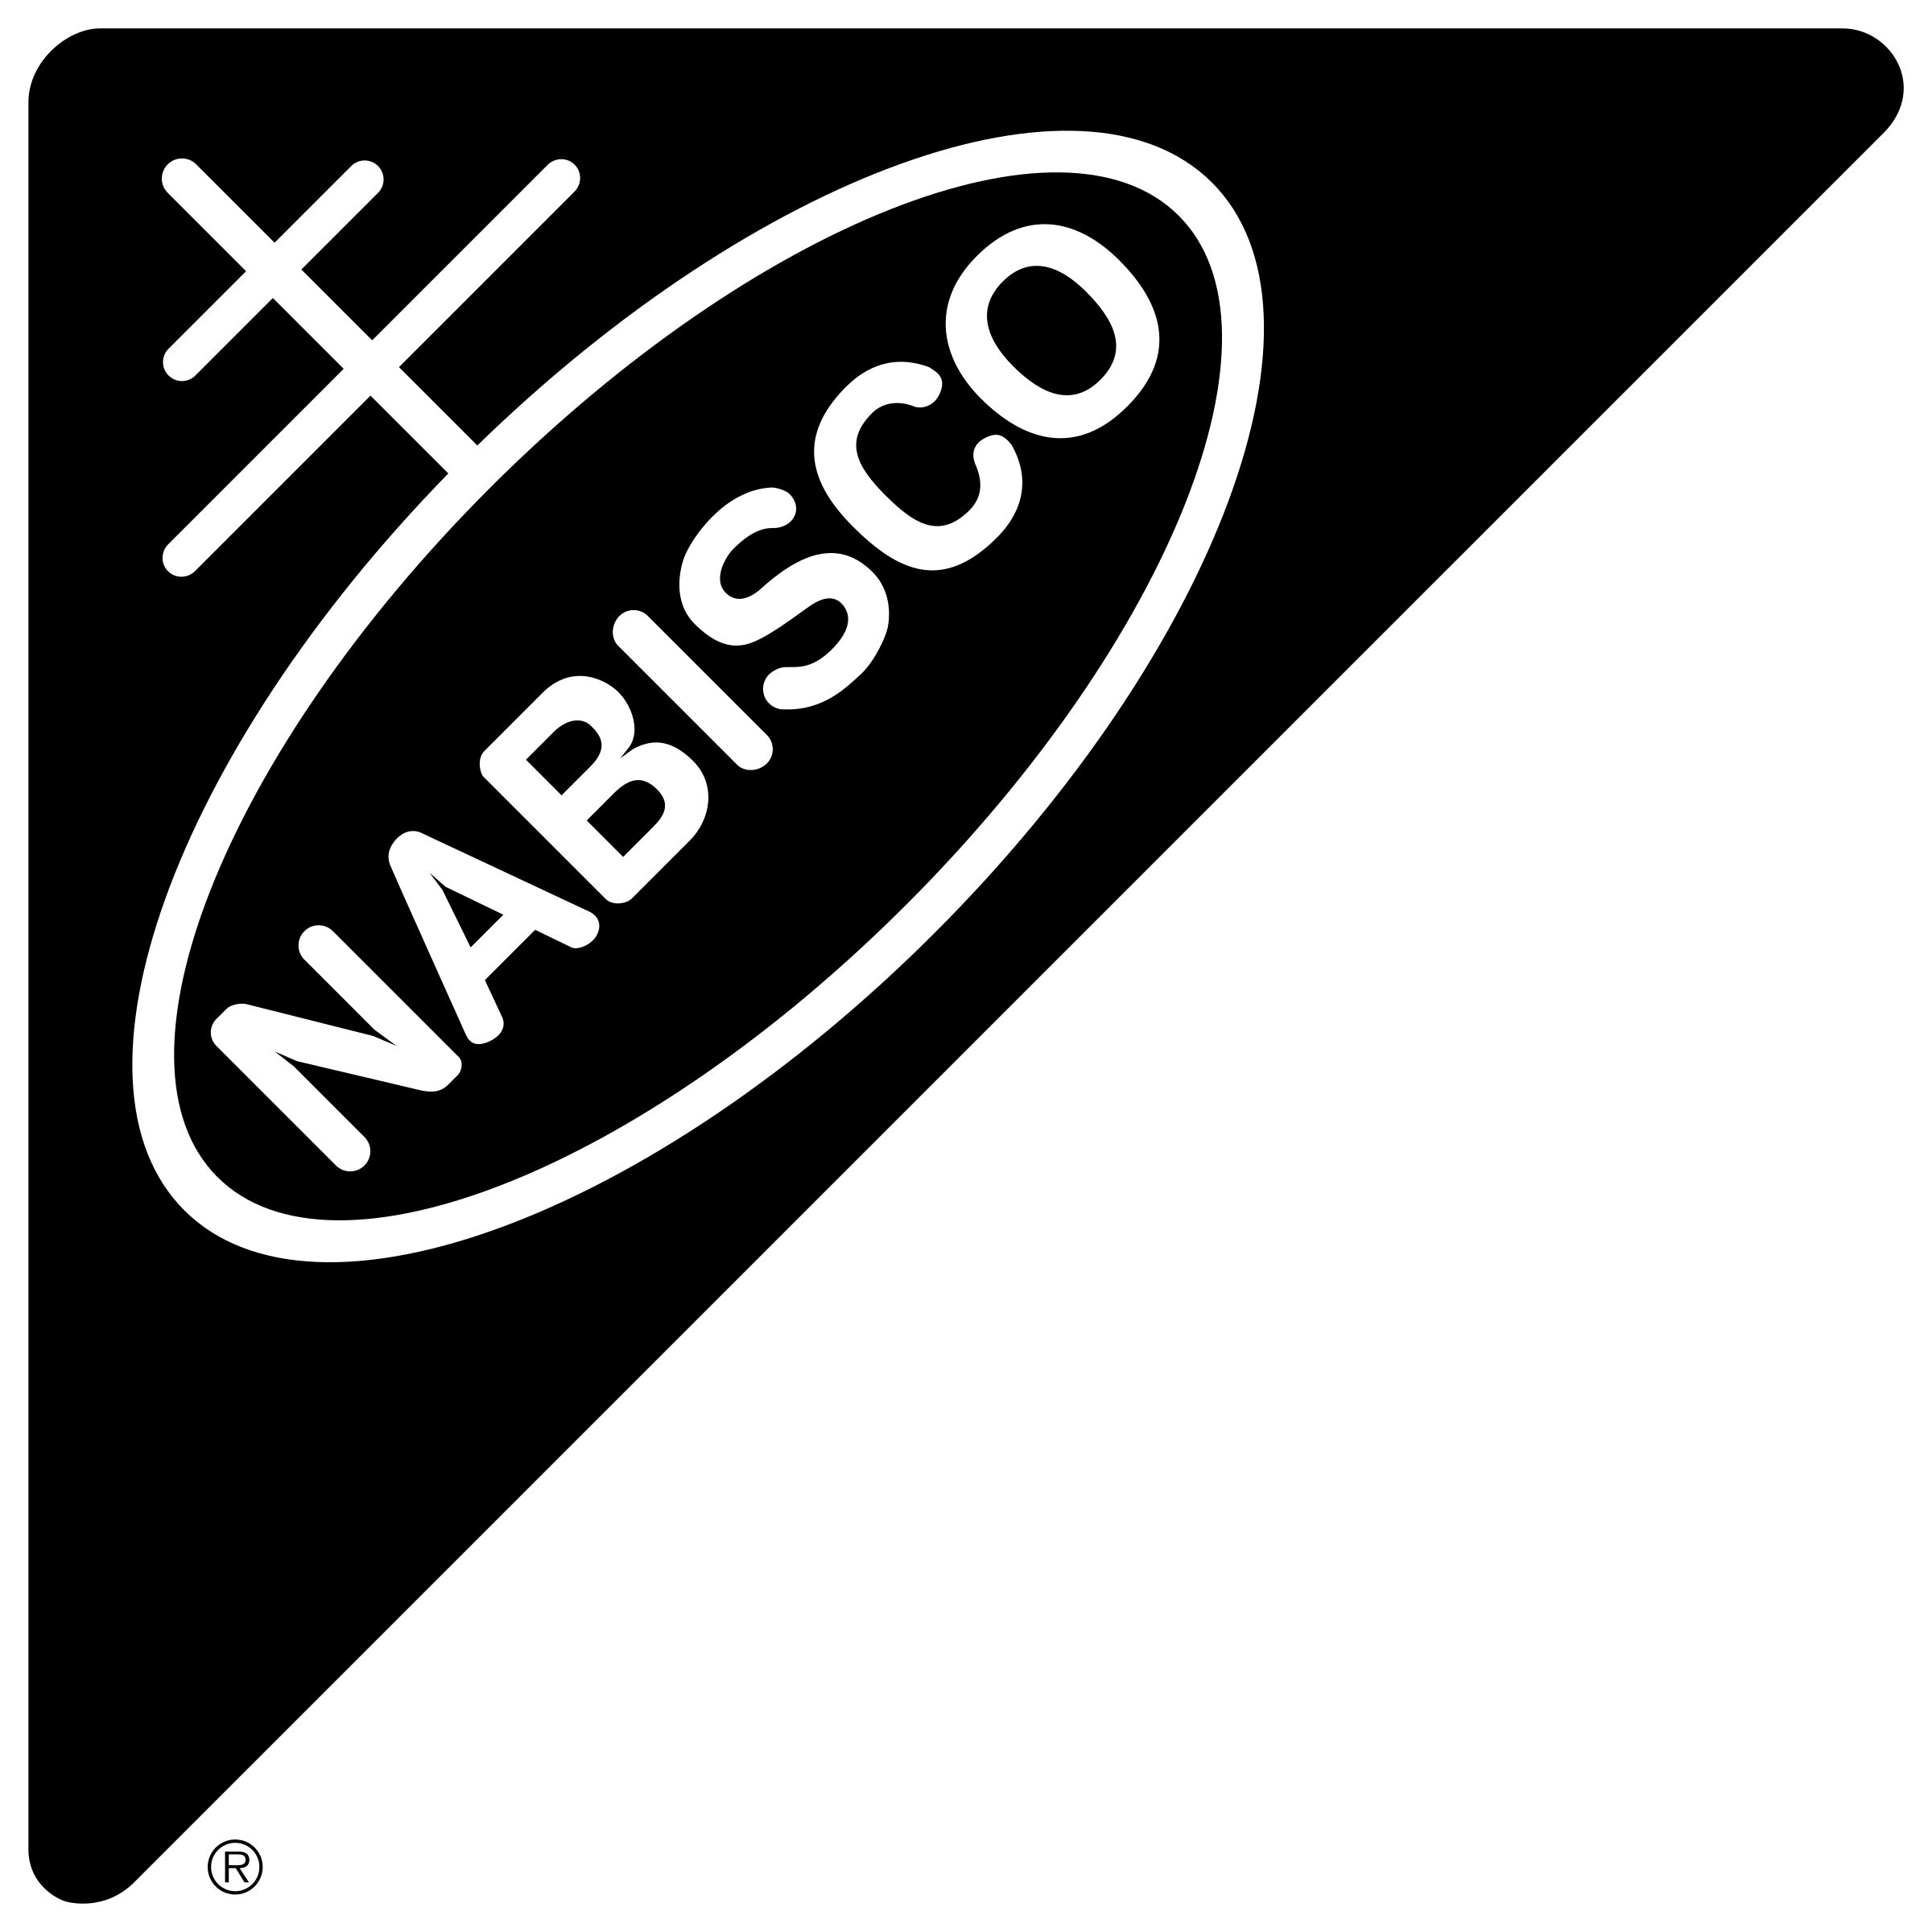 nabisco-logo-png-transparent.png